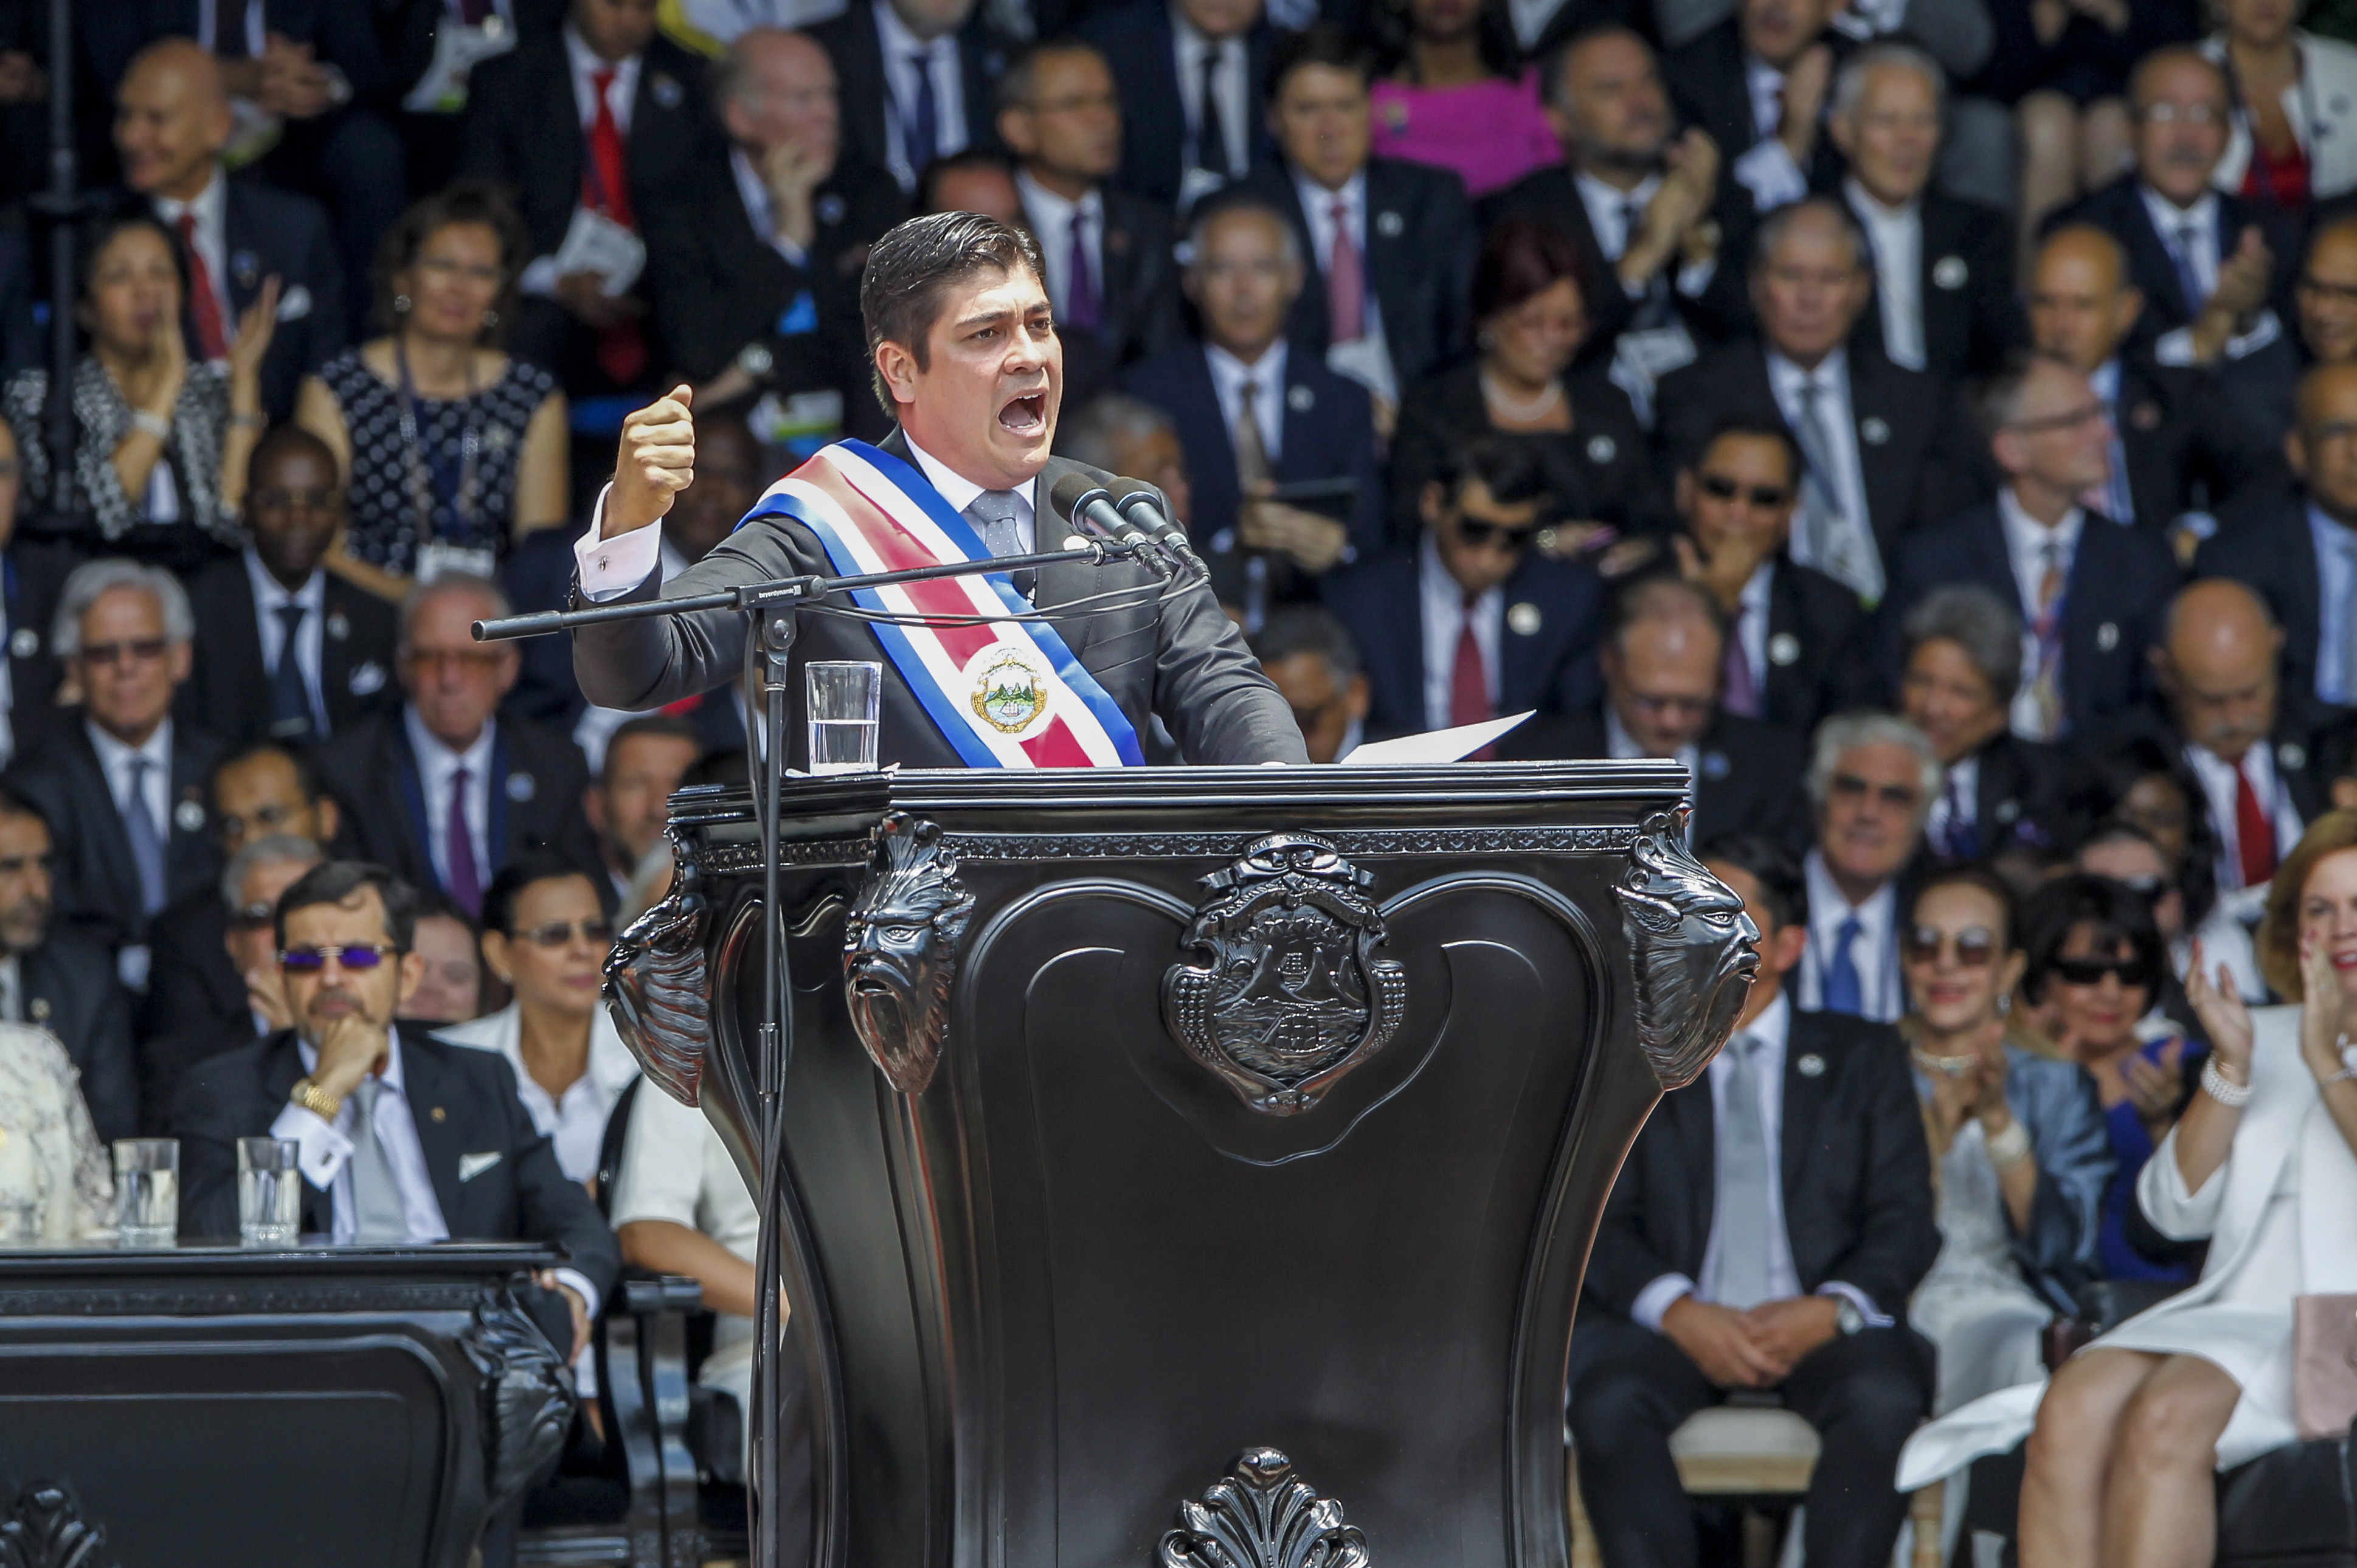 The President-elect Carlos Alvarado participate in the investiture ceremony, in the Plaza de la Democracia, in San Jose, Costa Rica, May 8, 2018. EPA-EFE/Alexander Otárola
